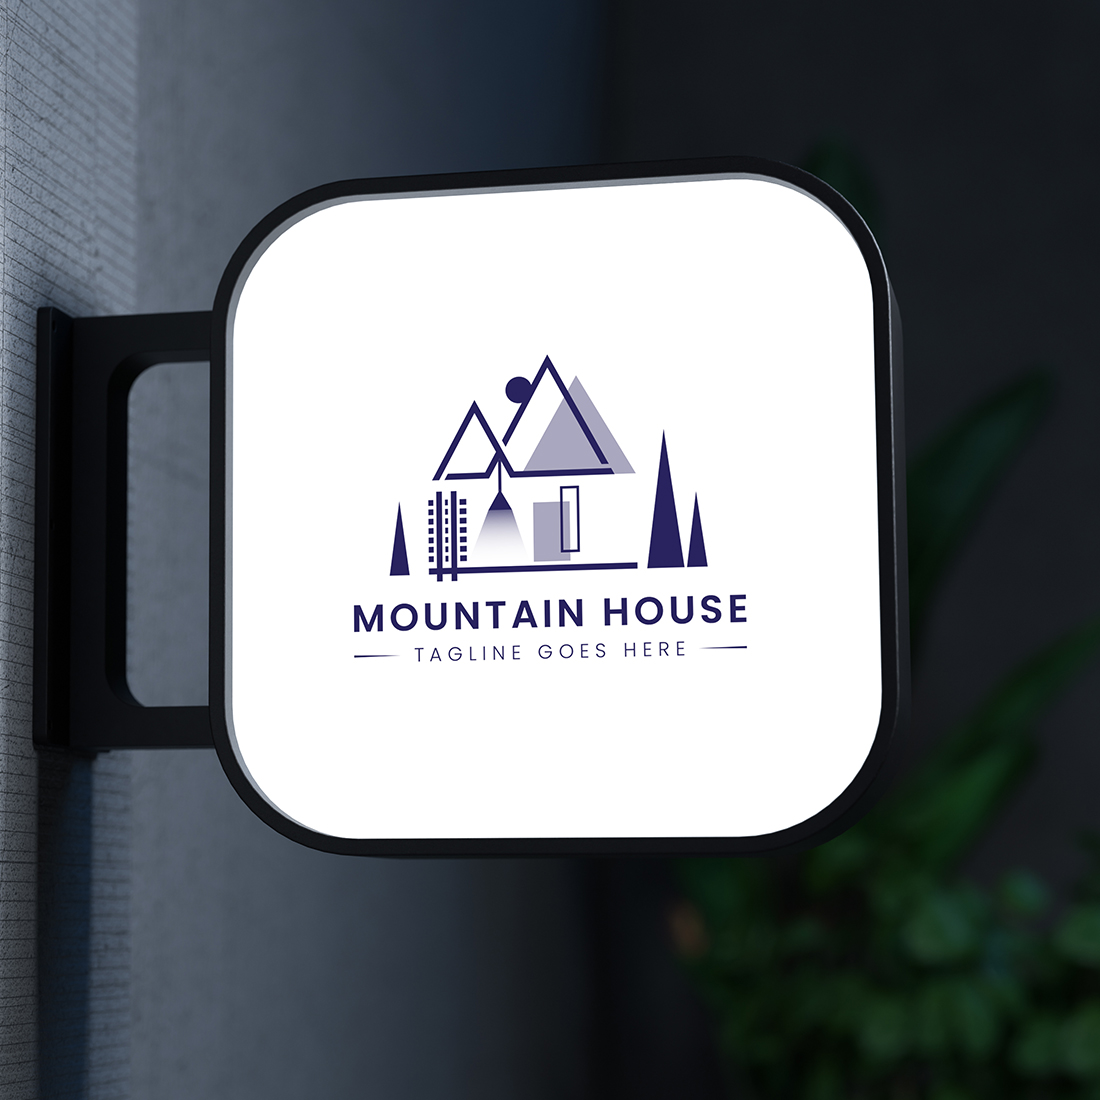 Mountain house logo preview image.